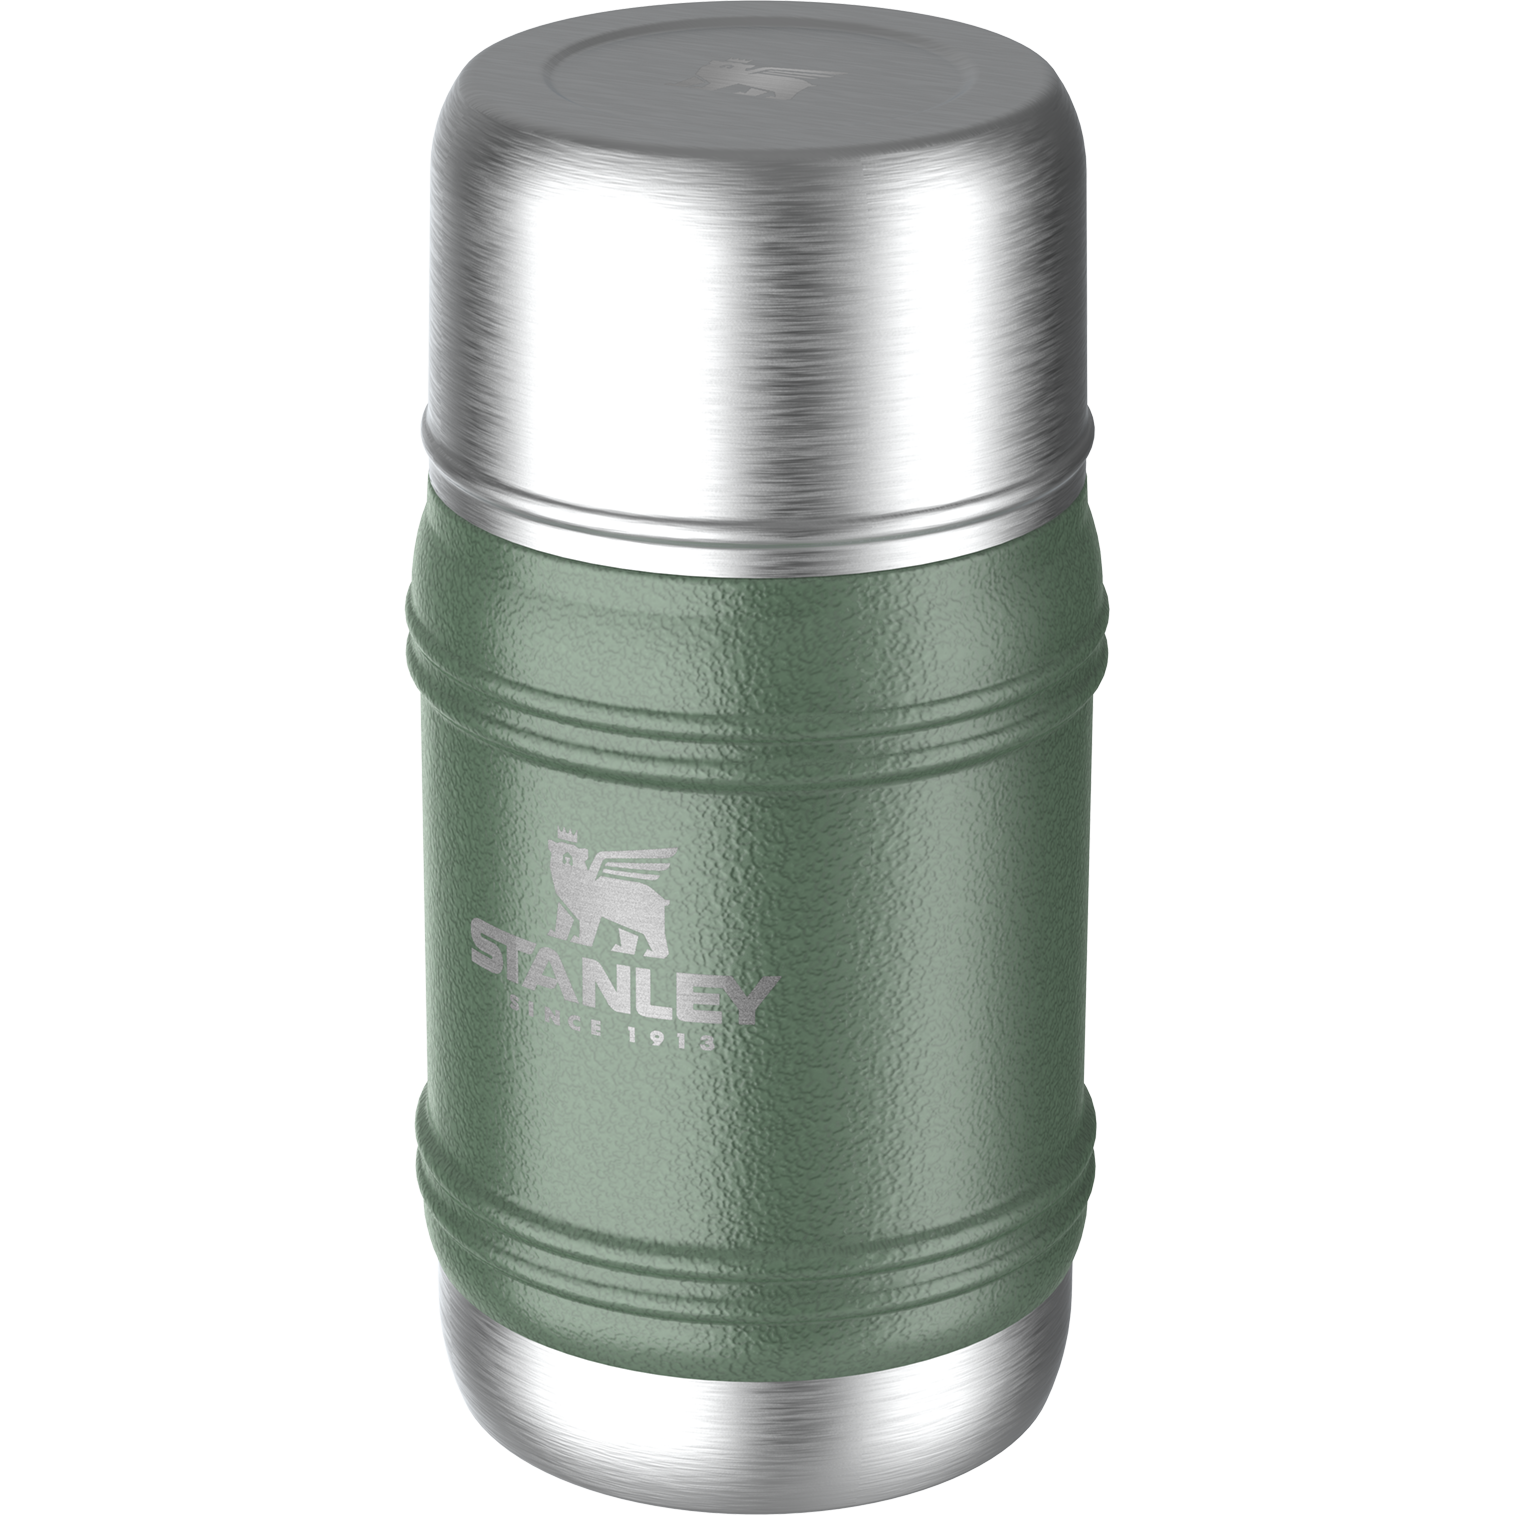 Stanley The Artisan Thermal Food Jar | 0.5L